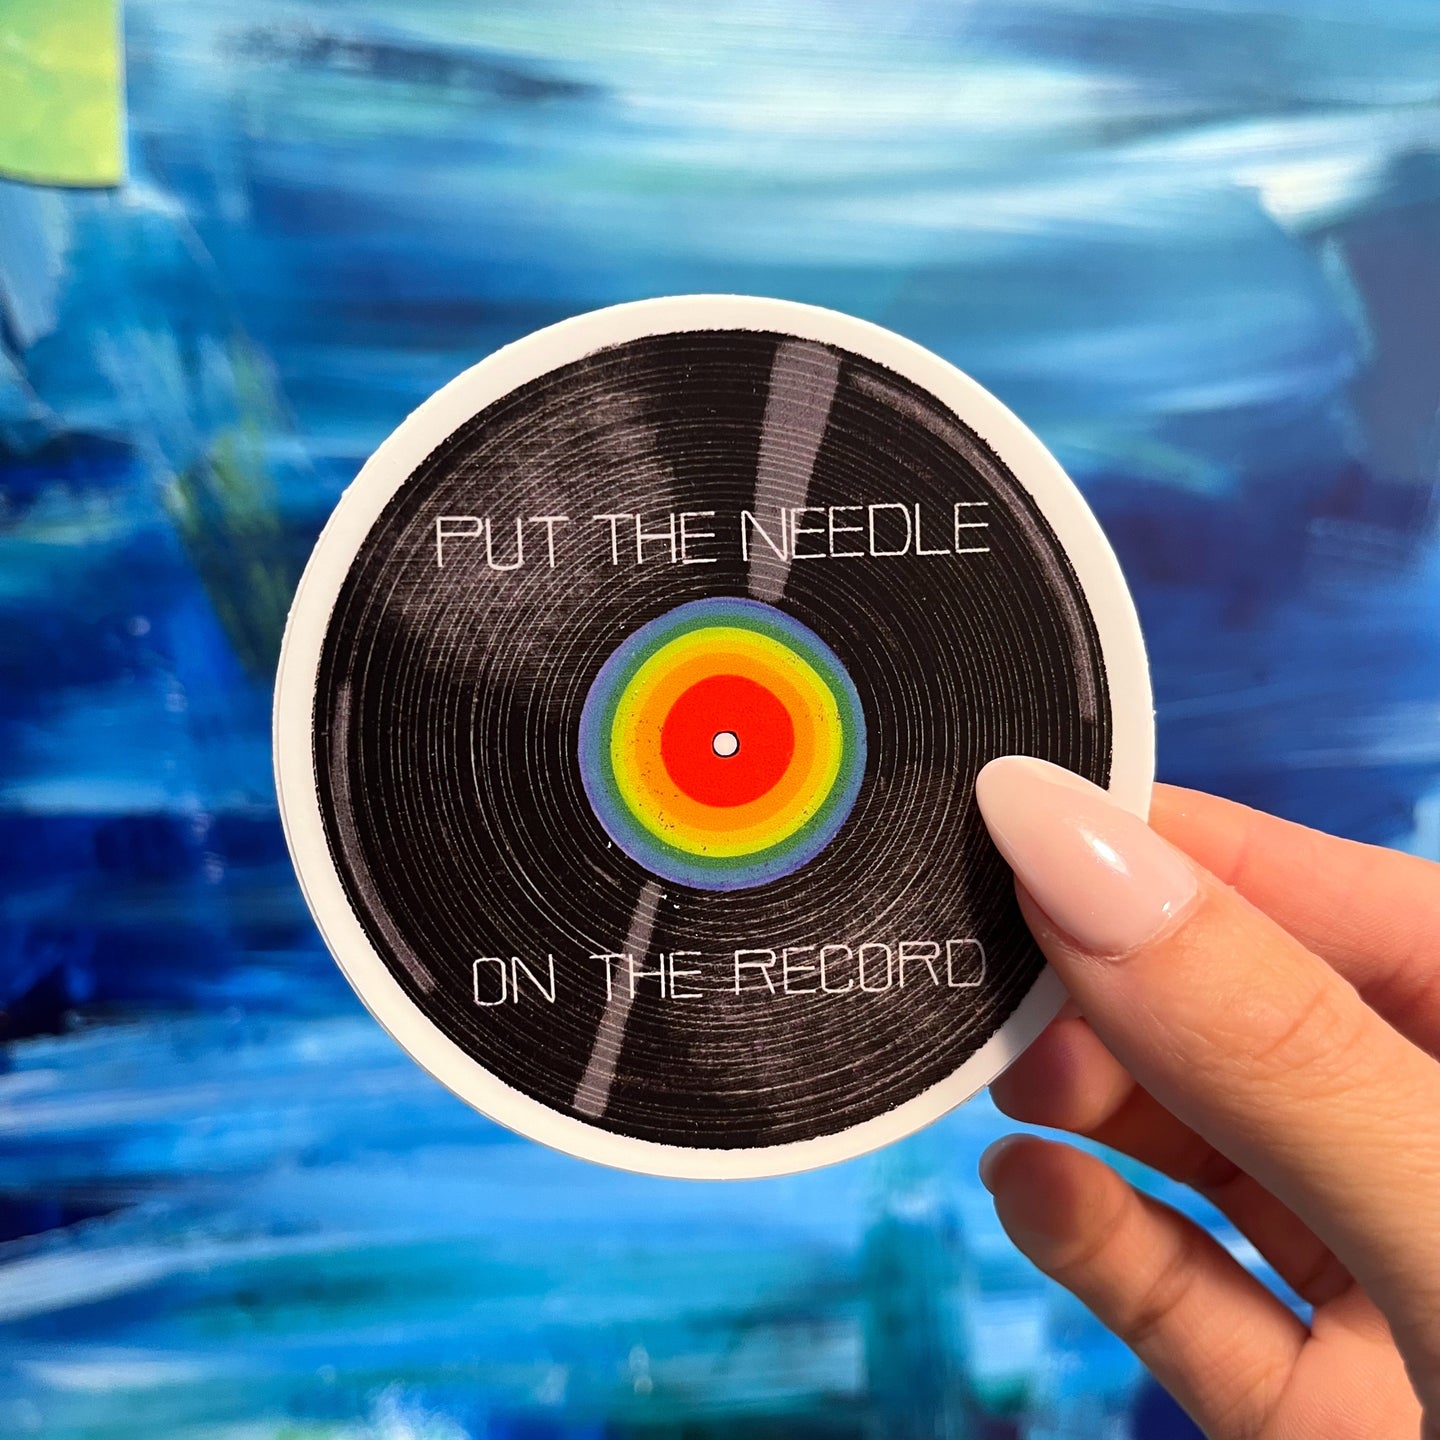 Put the Needle on the Record Vinyl Record Vinyl Sticker